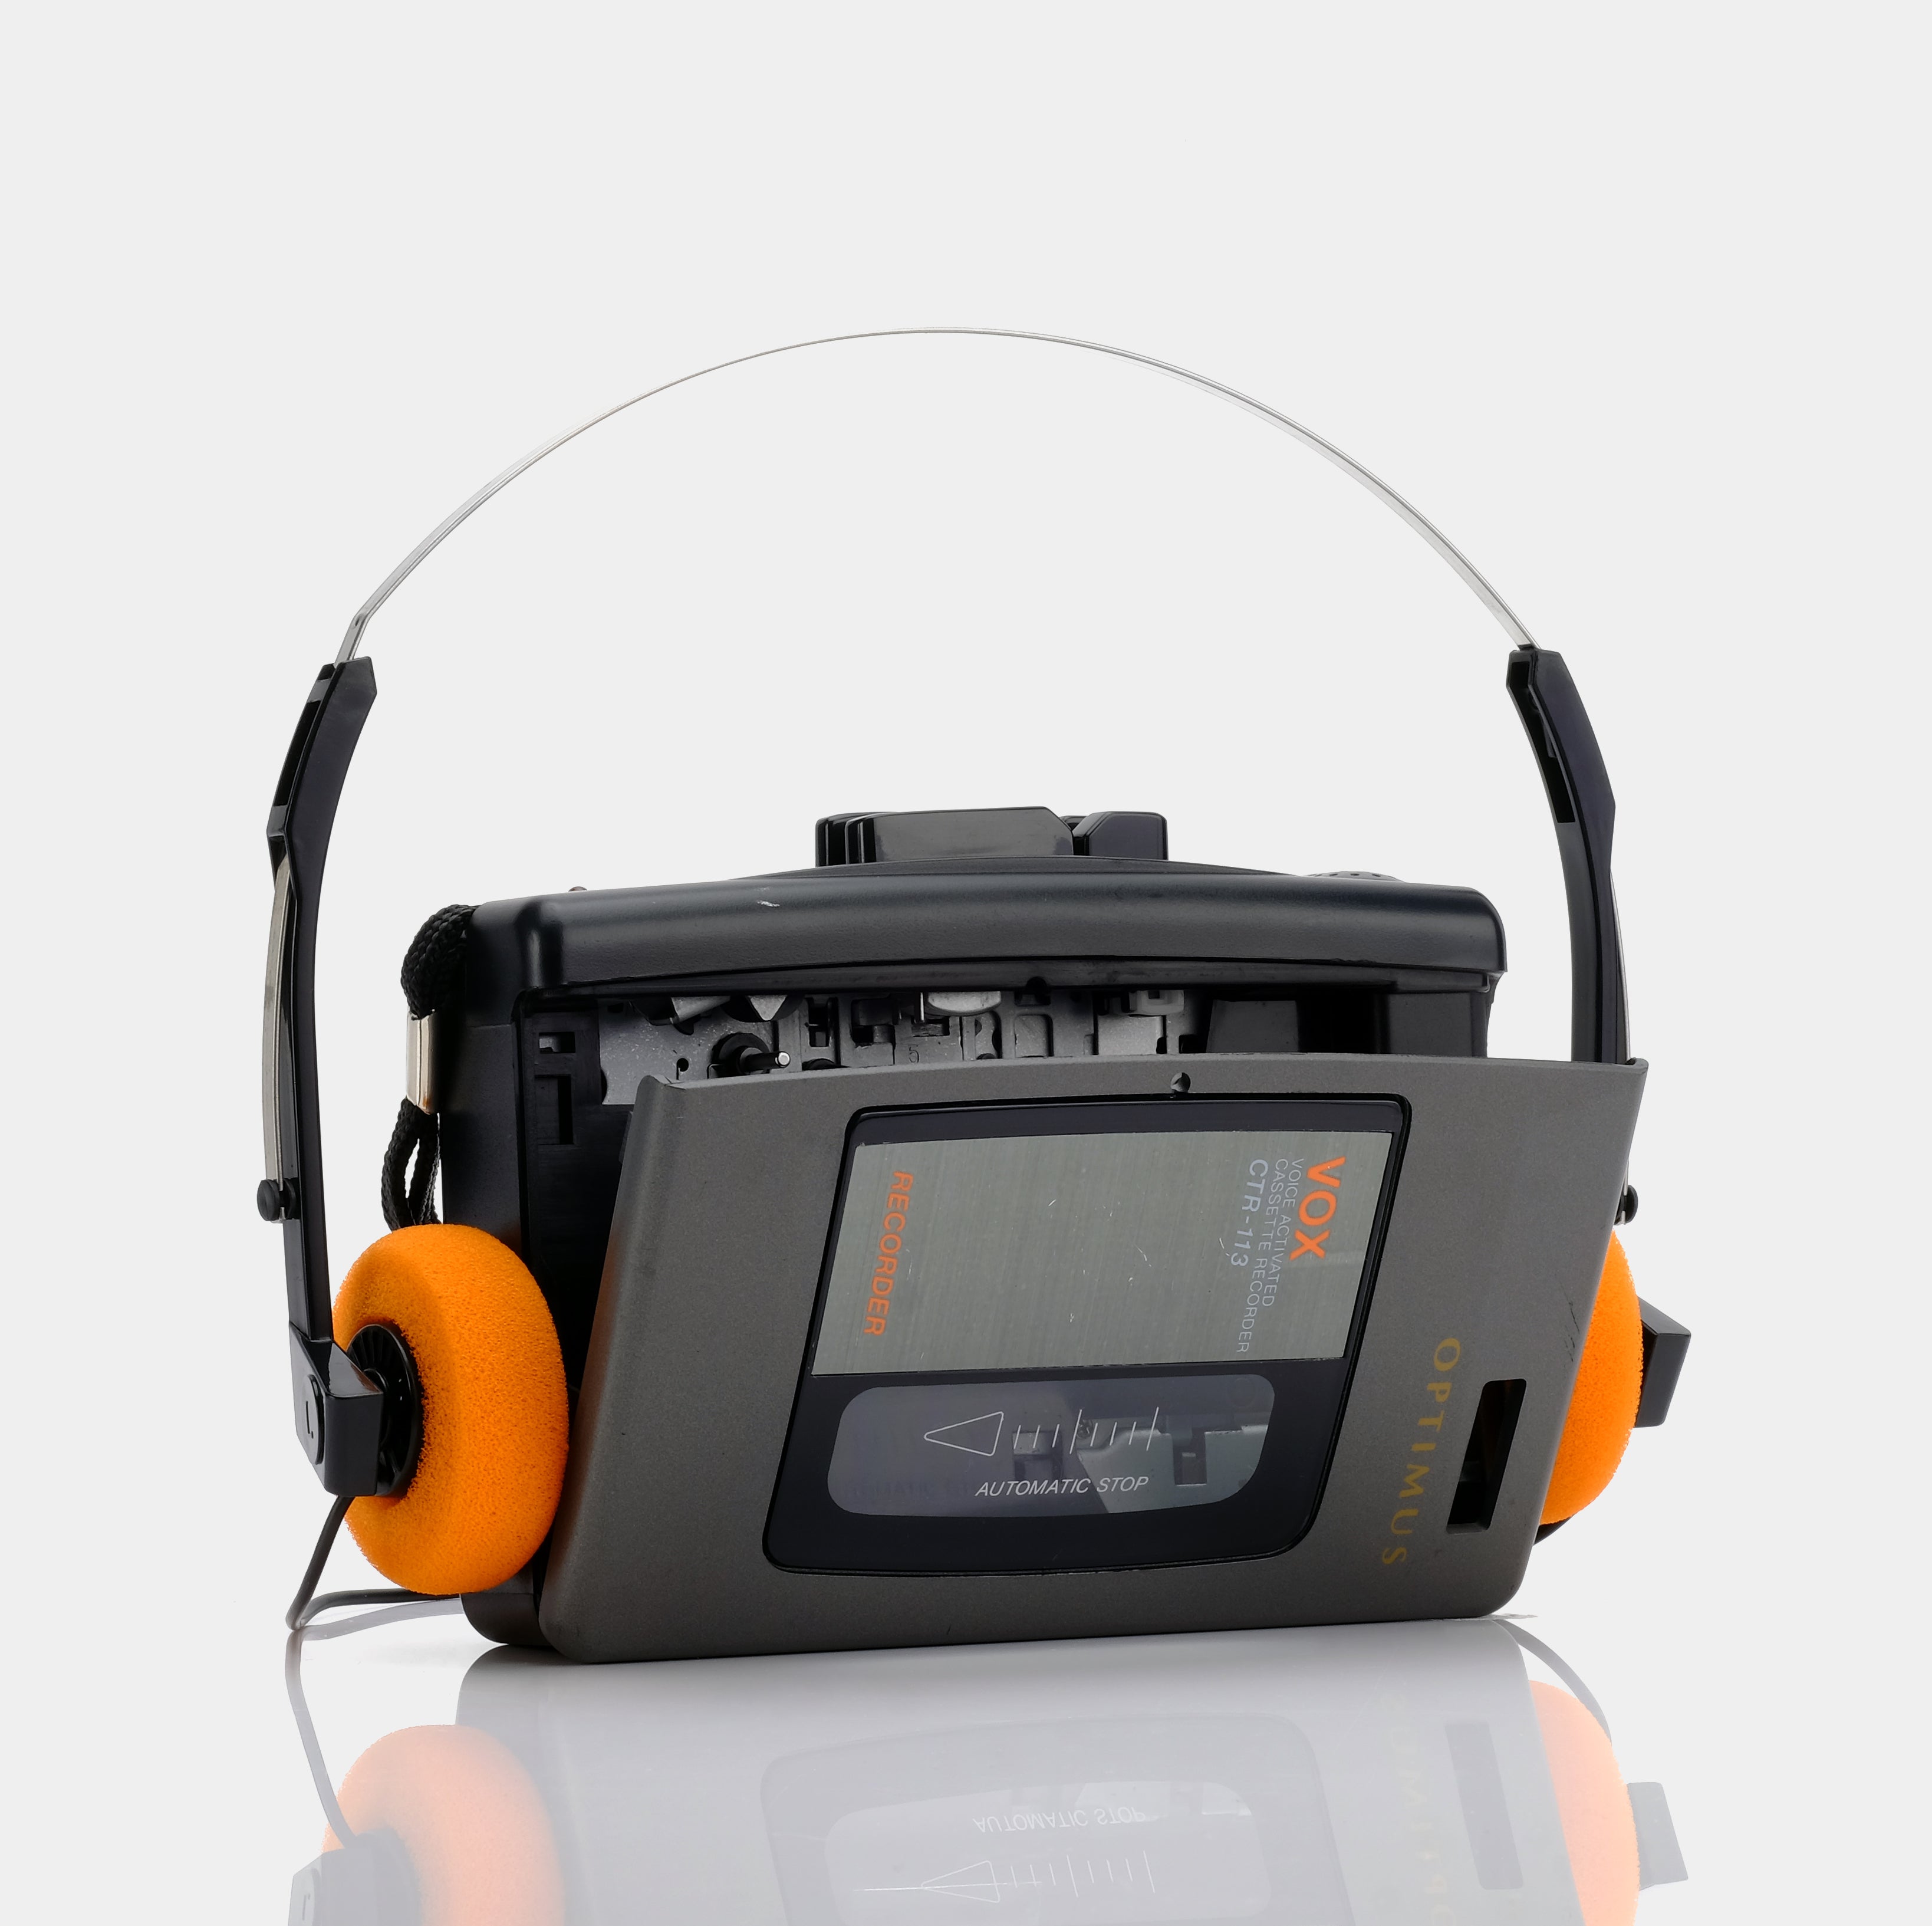 Optimus CTR-113 Portable Cassette Player/Recorder